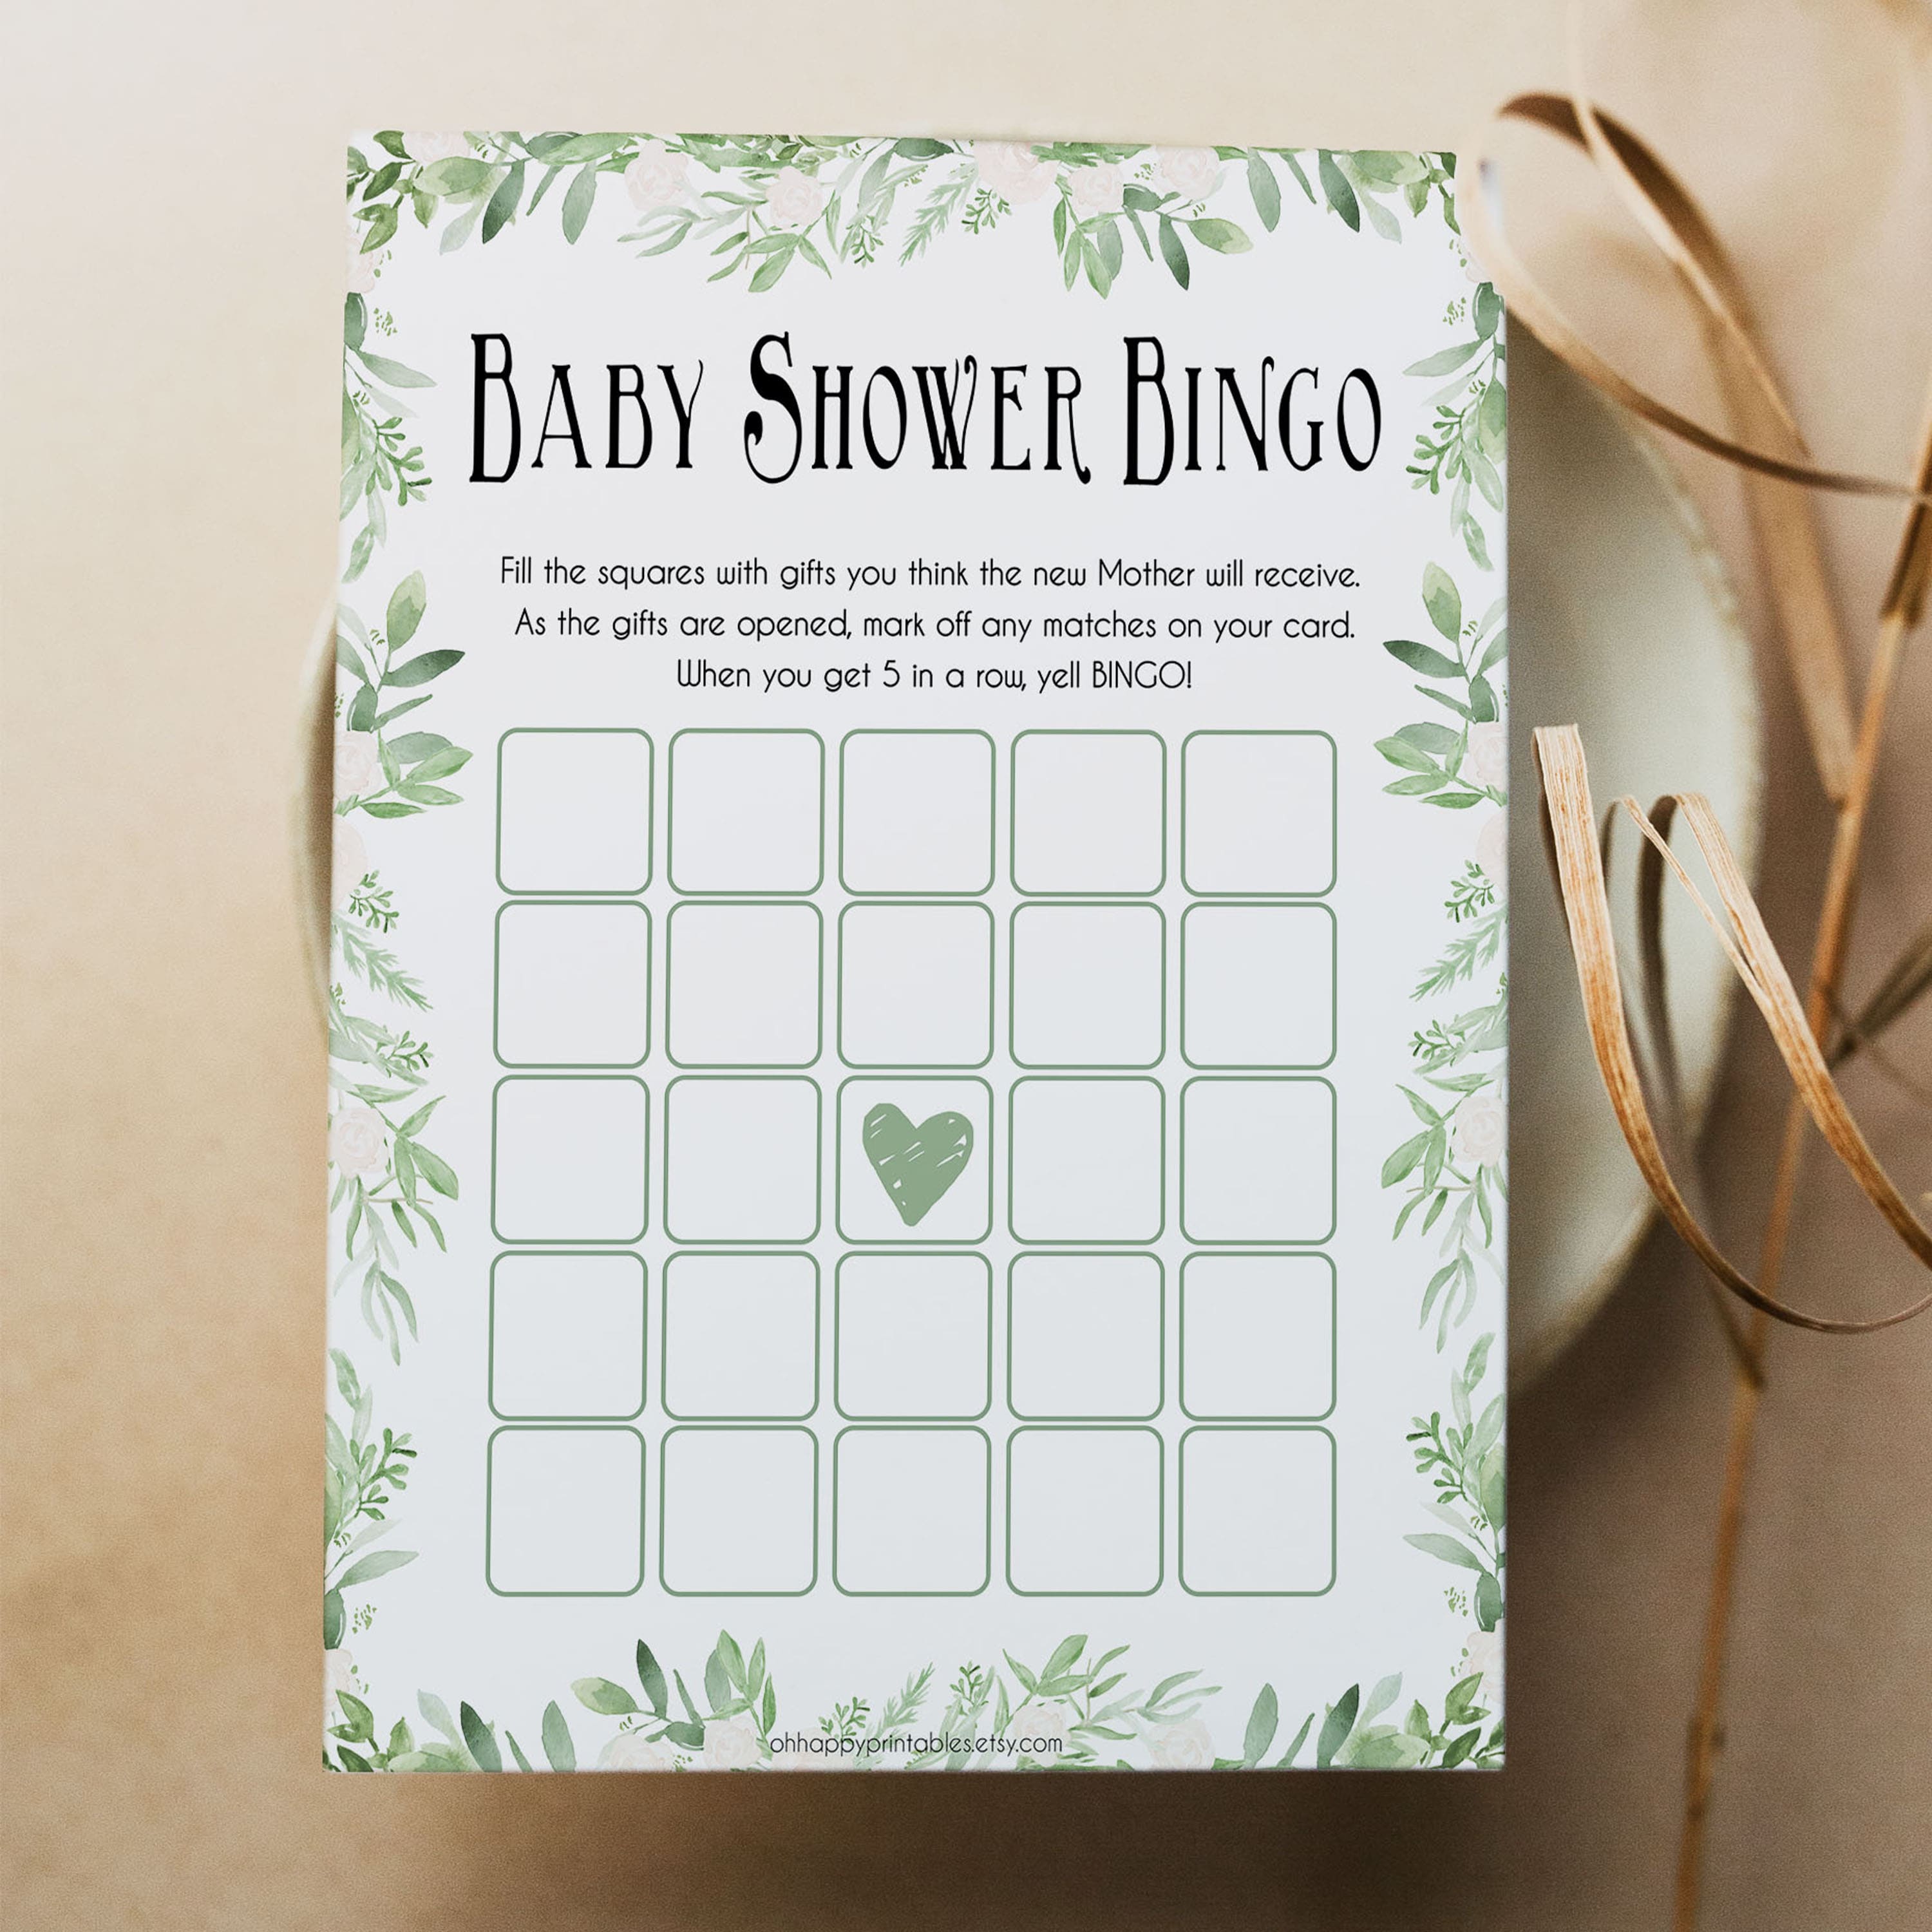 Baby Shower Bingo, Greenery Leaf, Gender Neutral Baby Shower Games, Baby Bingo Game, Green Baby Shower, Botanical Baby Shower Games, printable baby shower games, fun baby shower games, popular baby shower games